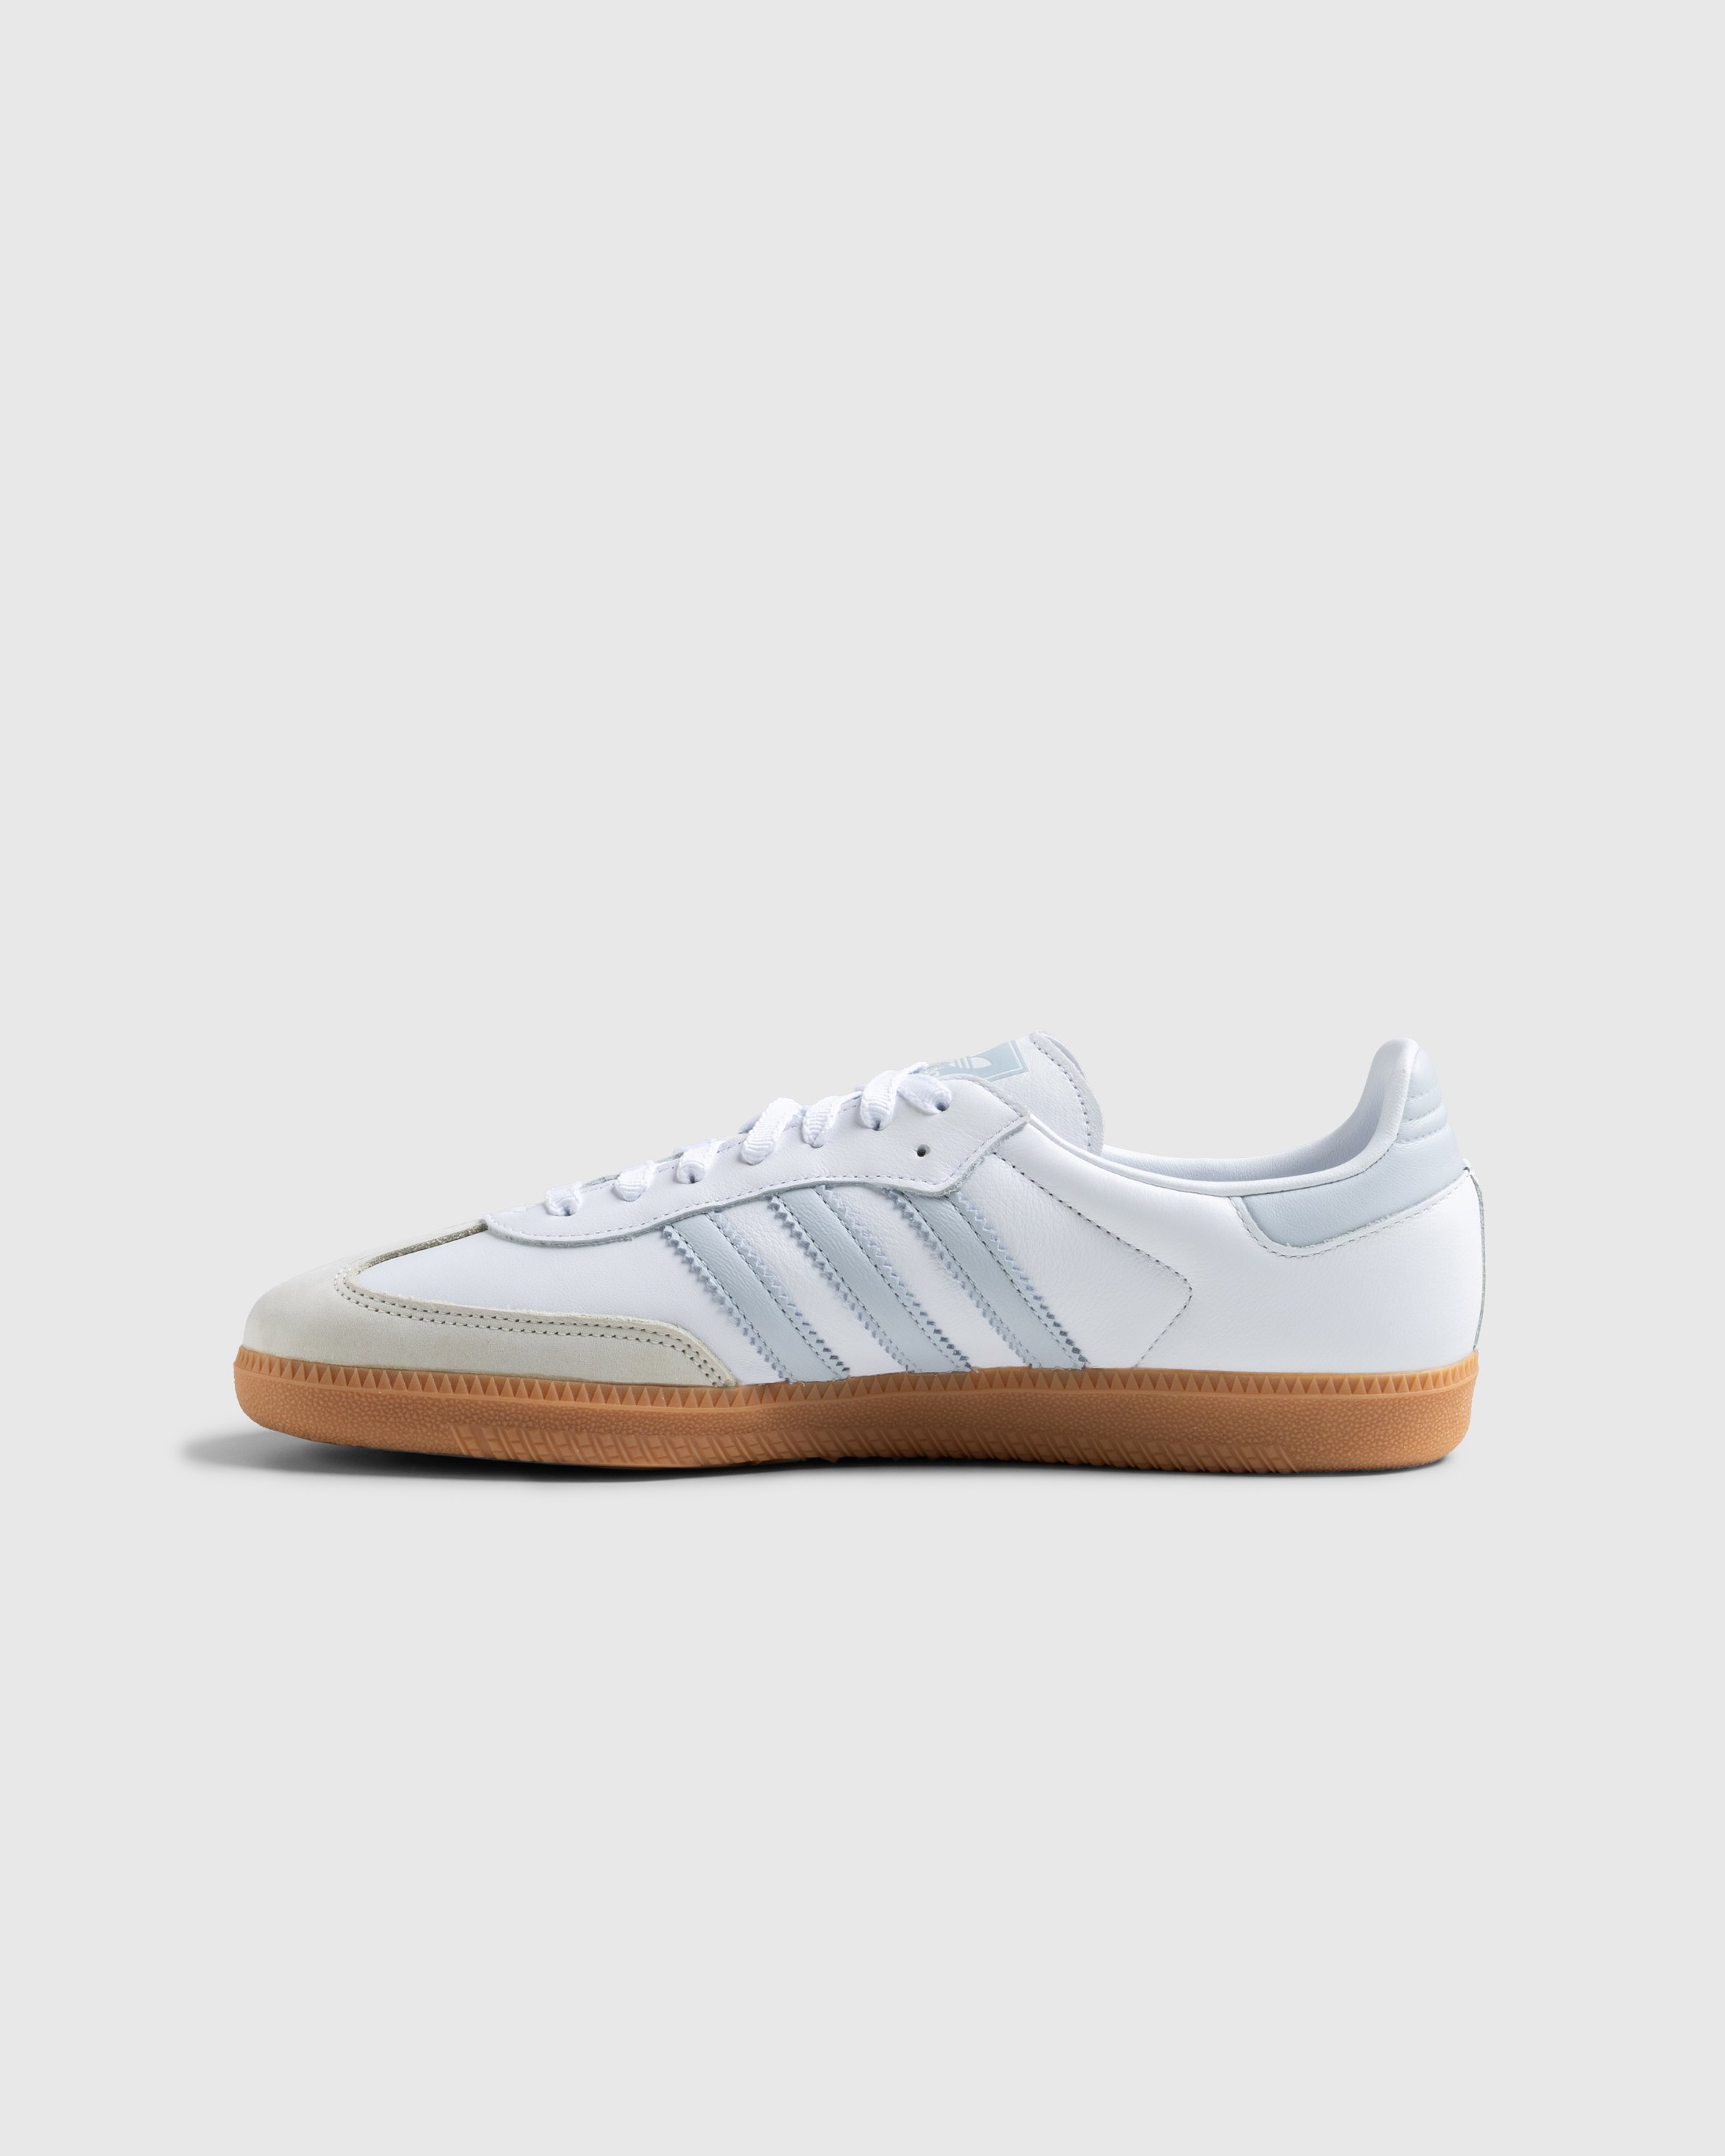 Adidas - Samba Og W          Ftwwht/Halblu/Owhite - Footwear - White - Image 2